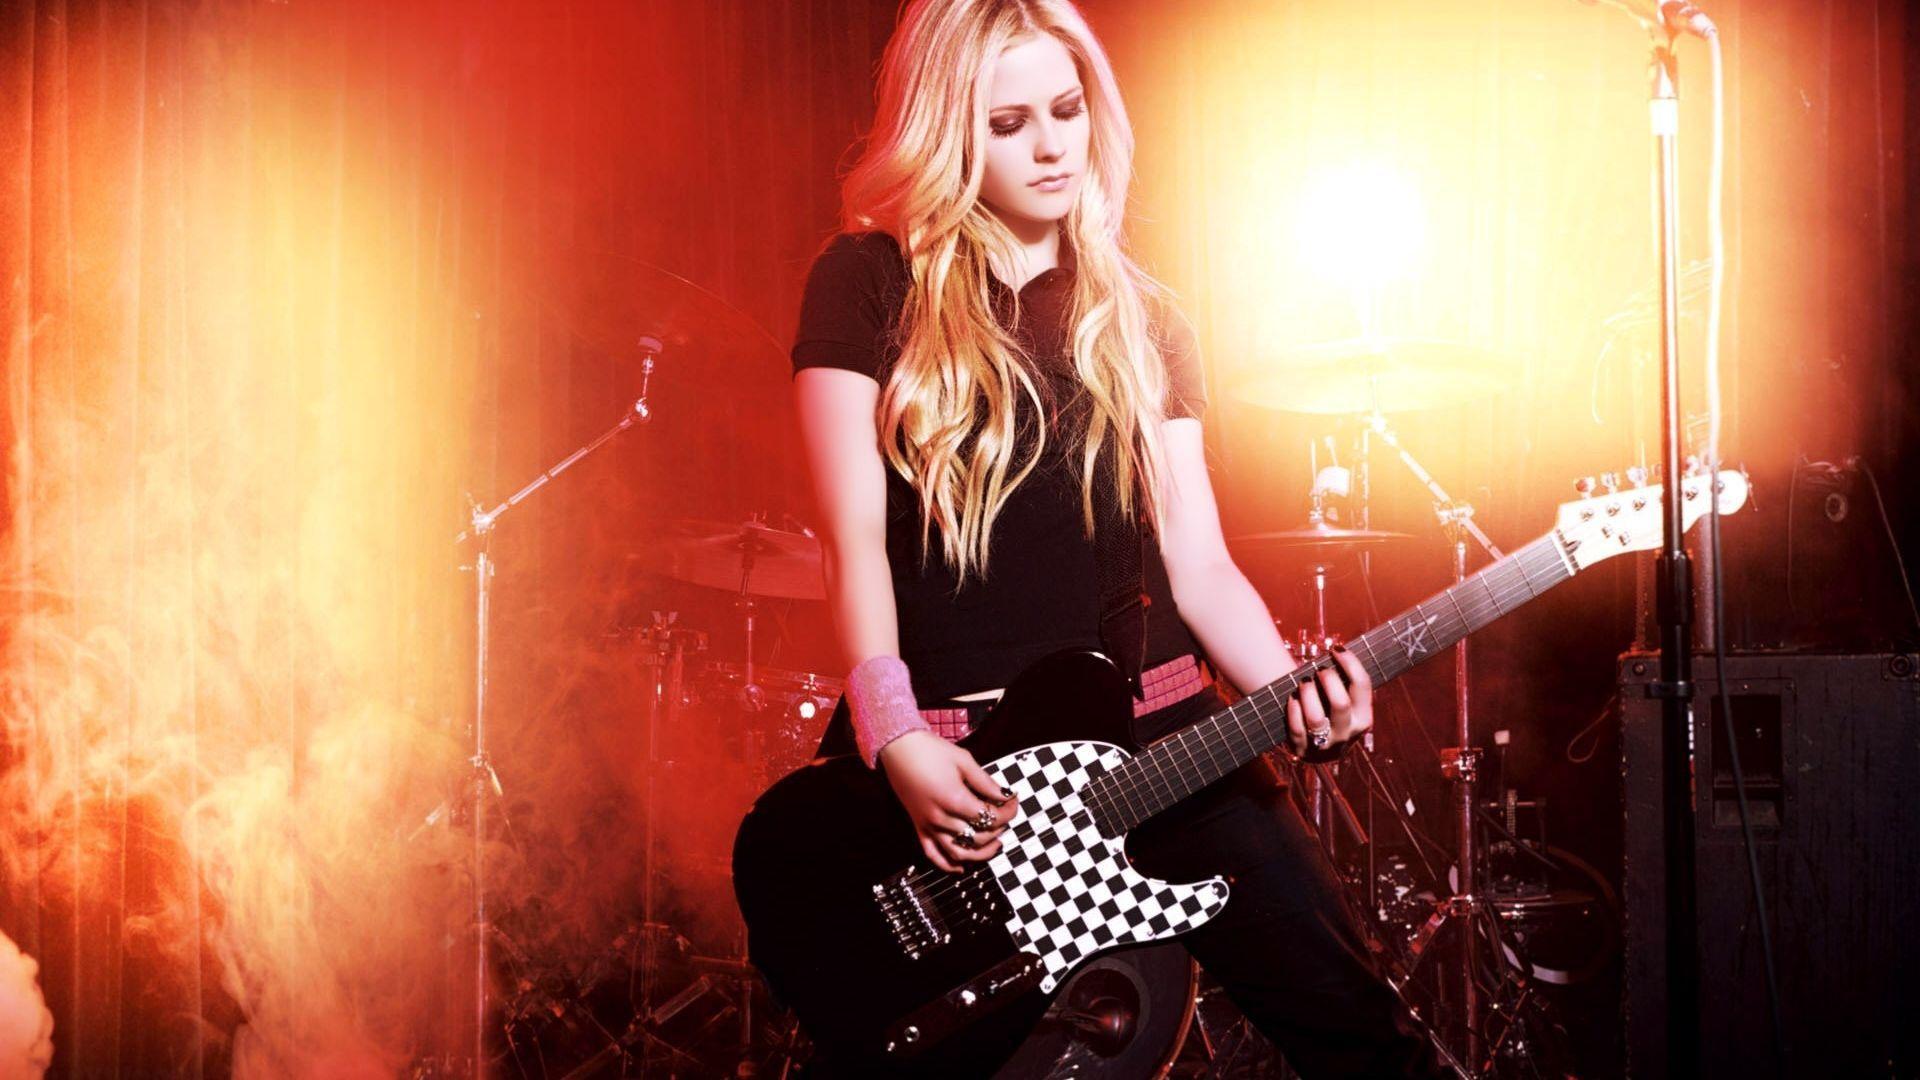 Avril Lavigne Concert Live HD Image Wallpaper. walldesktophd